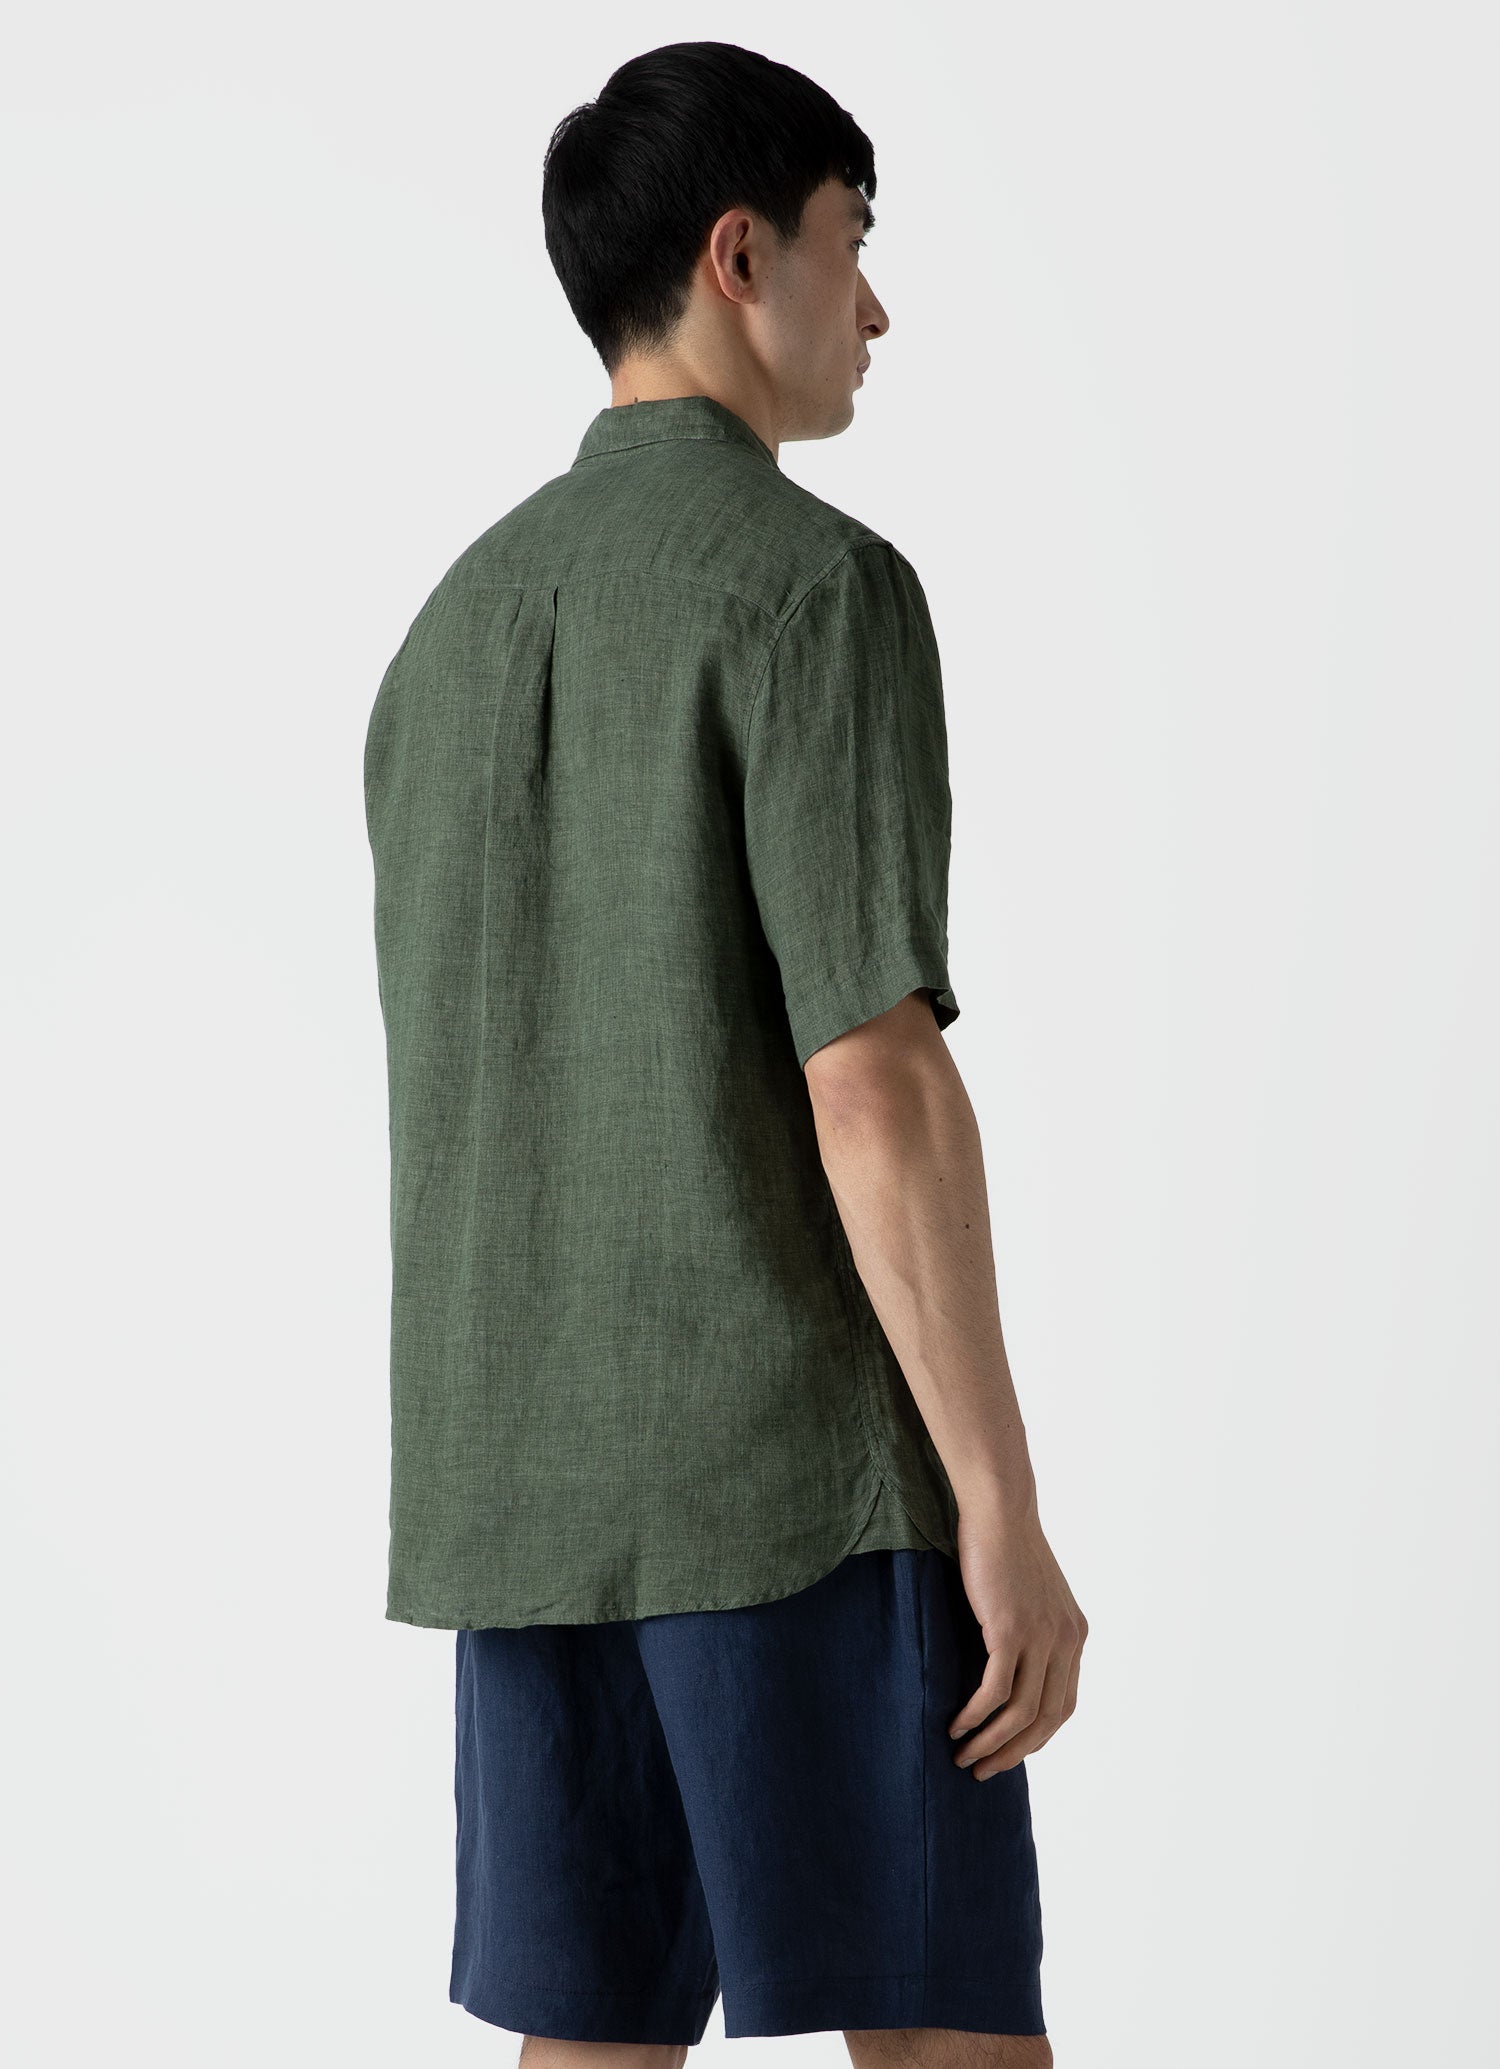 Men's Short Sleeve Linen Shirt in Hunter Green